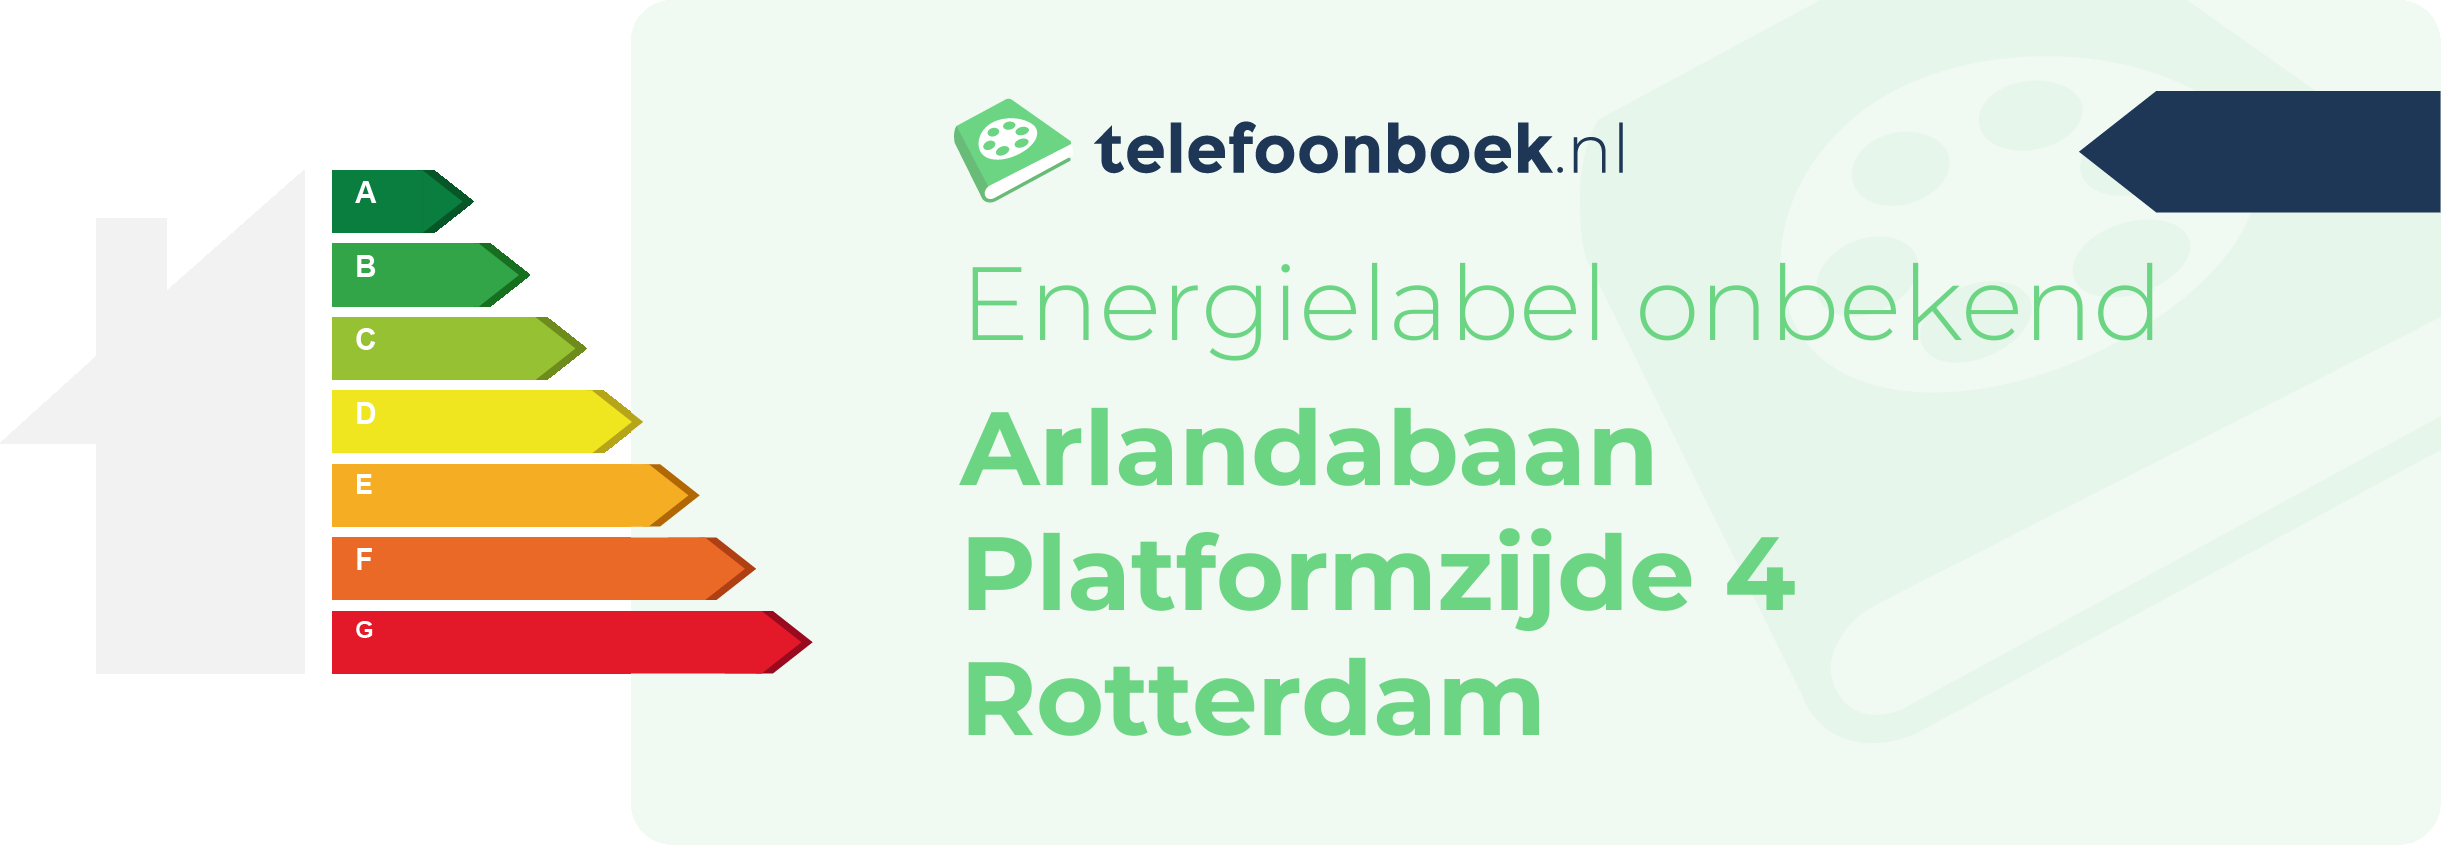 Energielabel Arlandabaan Platformzijde 4 Rotterdam